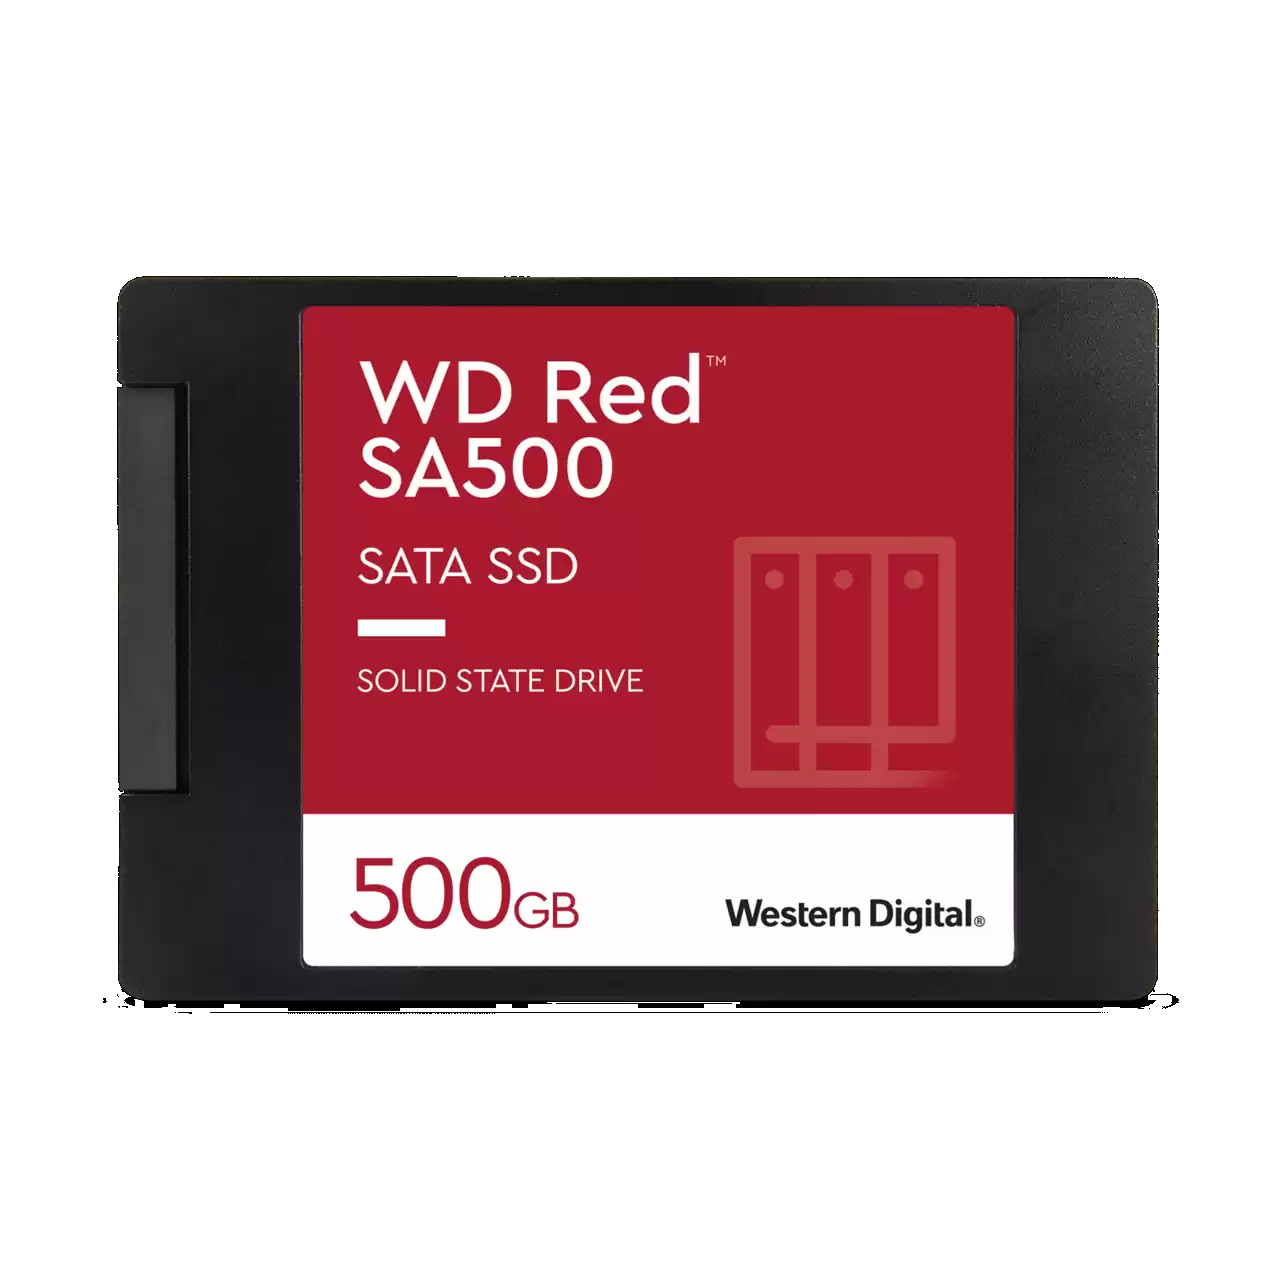 Western Digital WD Red SA500 NAS SATA SSD 2.5 Inch Performance High Endurance